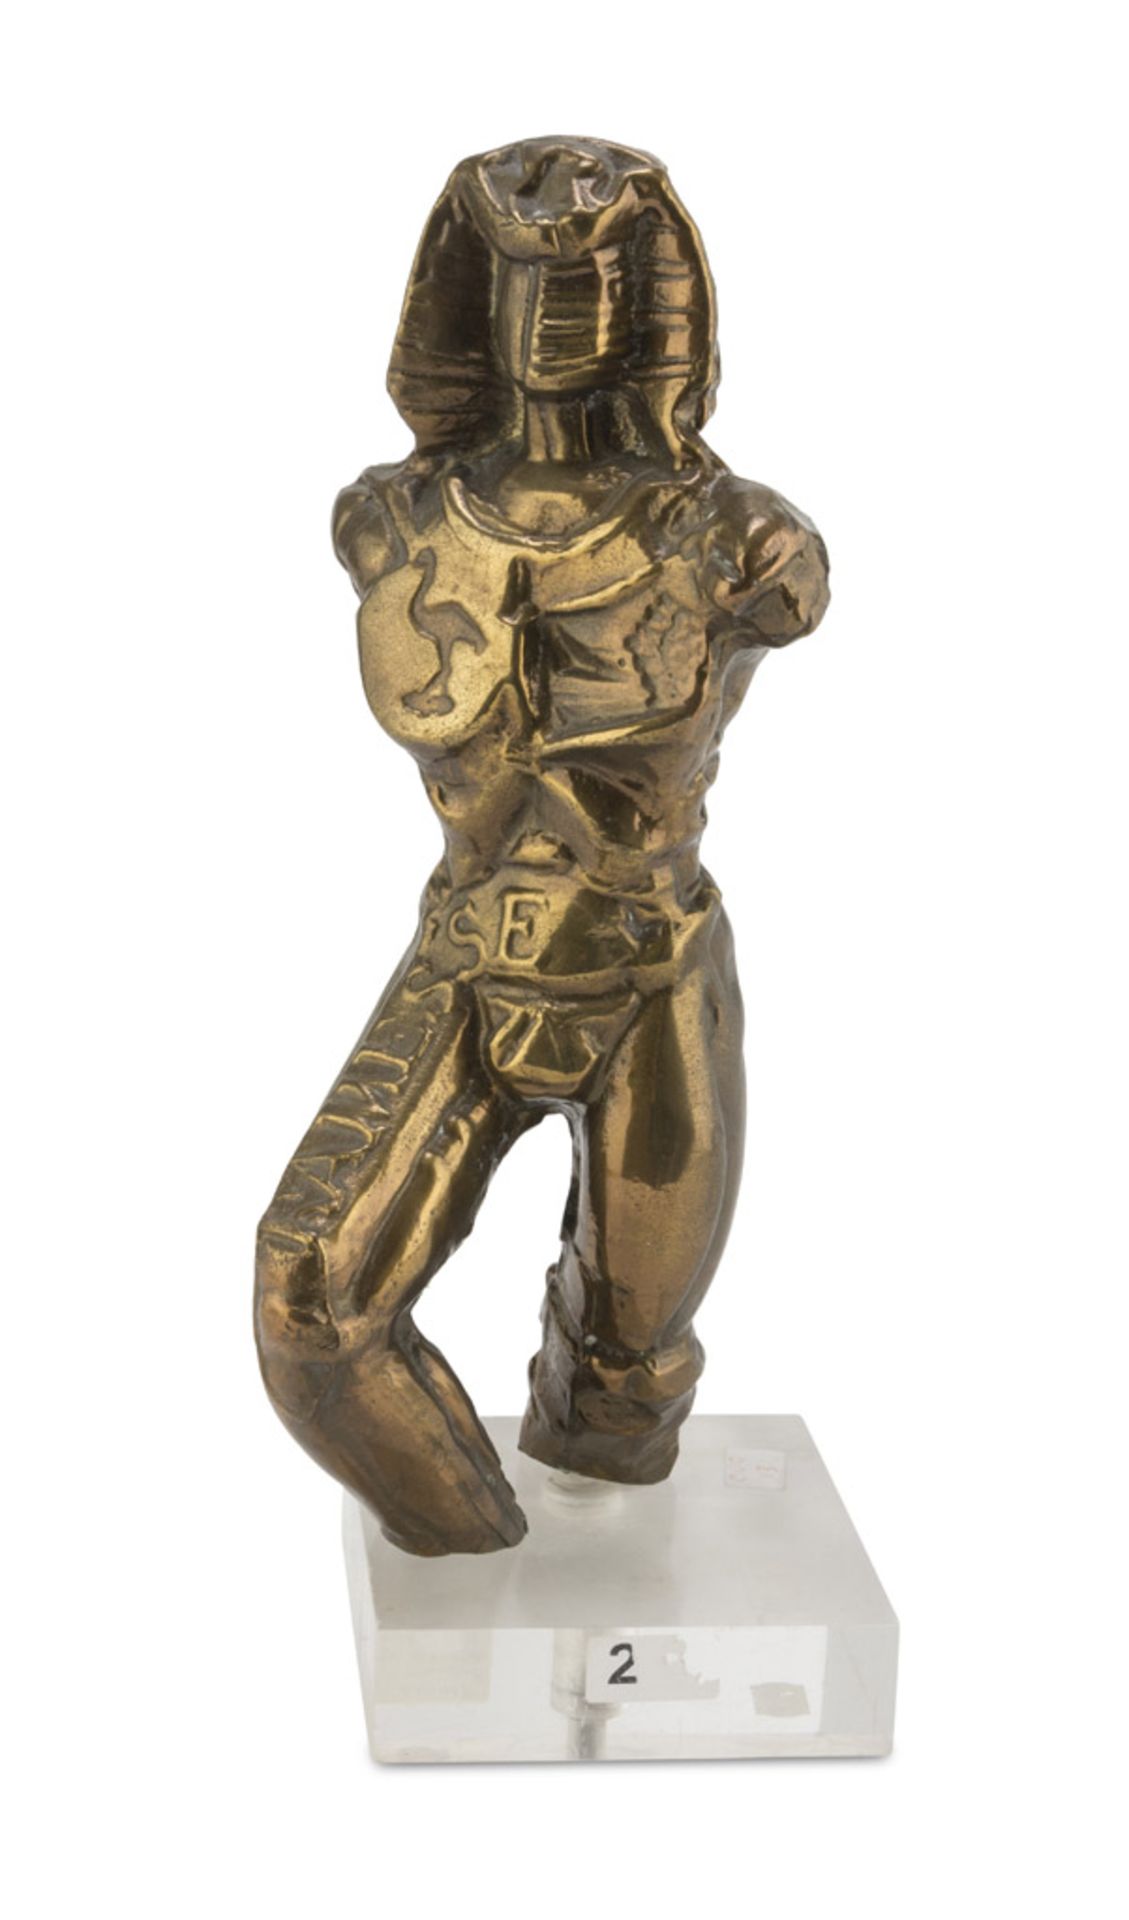 ENRICO MANERA (Asmara 1948) Rames, 1979 Sculpture in brass, ex. 4/100 h. cm. 30 Title on the left